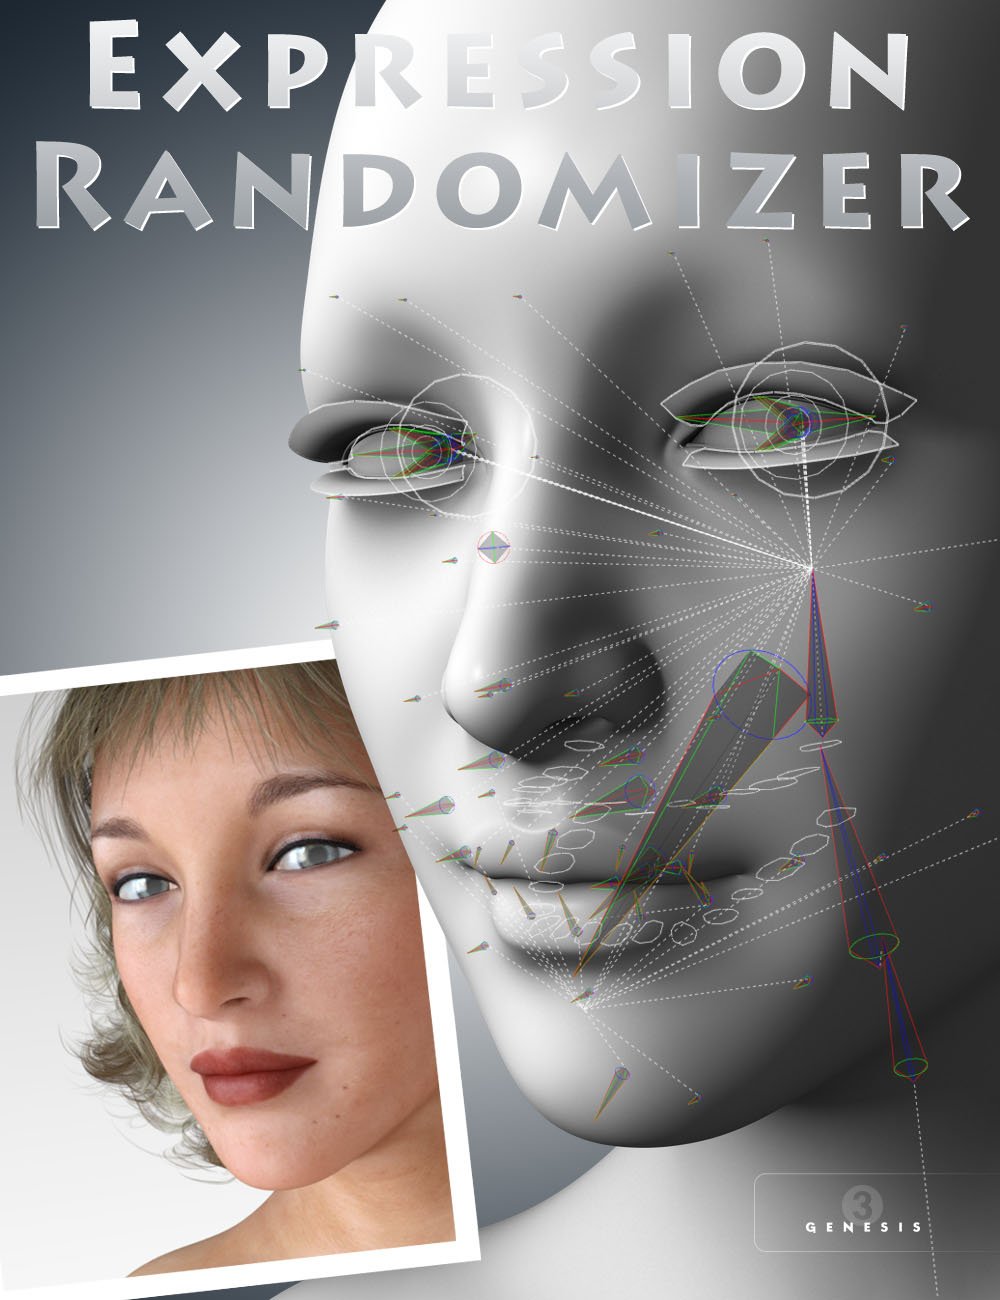 Expression Randomizer for Genesis 3 by: Cayman Studios, 3D Models by Daz 3D